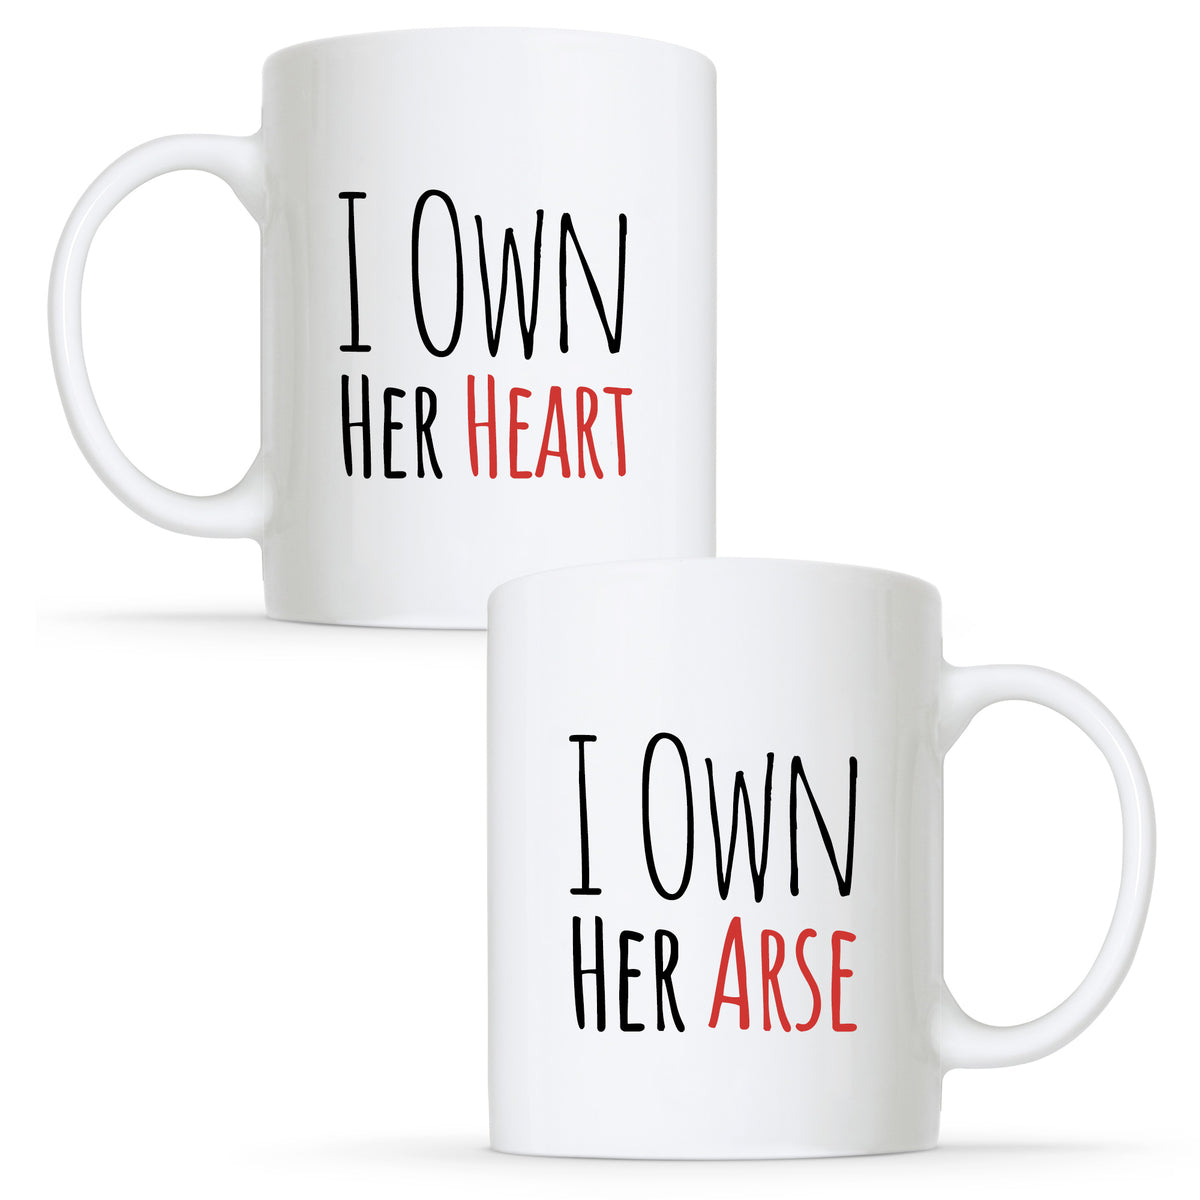 I Own Her Heart &amp; I Own Her Arse - Gay Lesbian Couple Mug Set | Gift